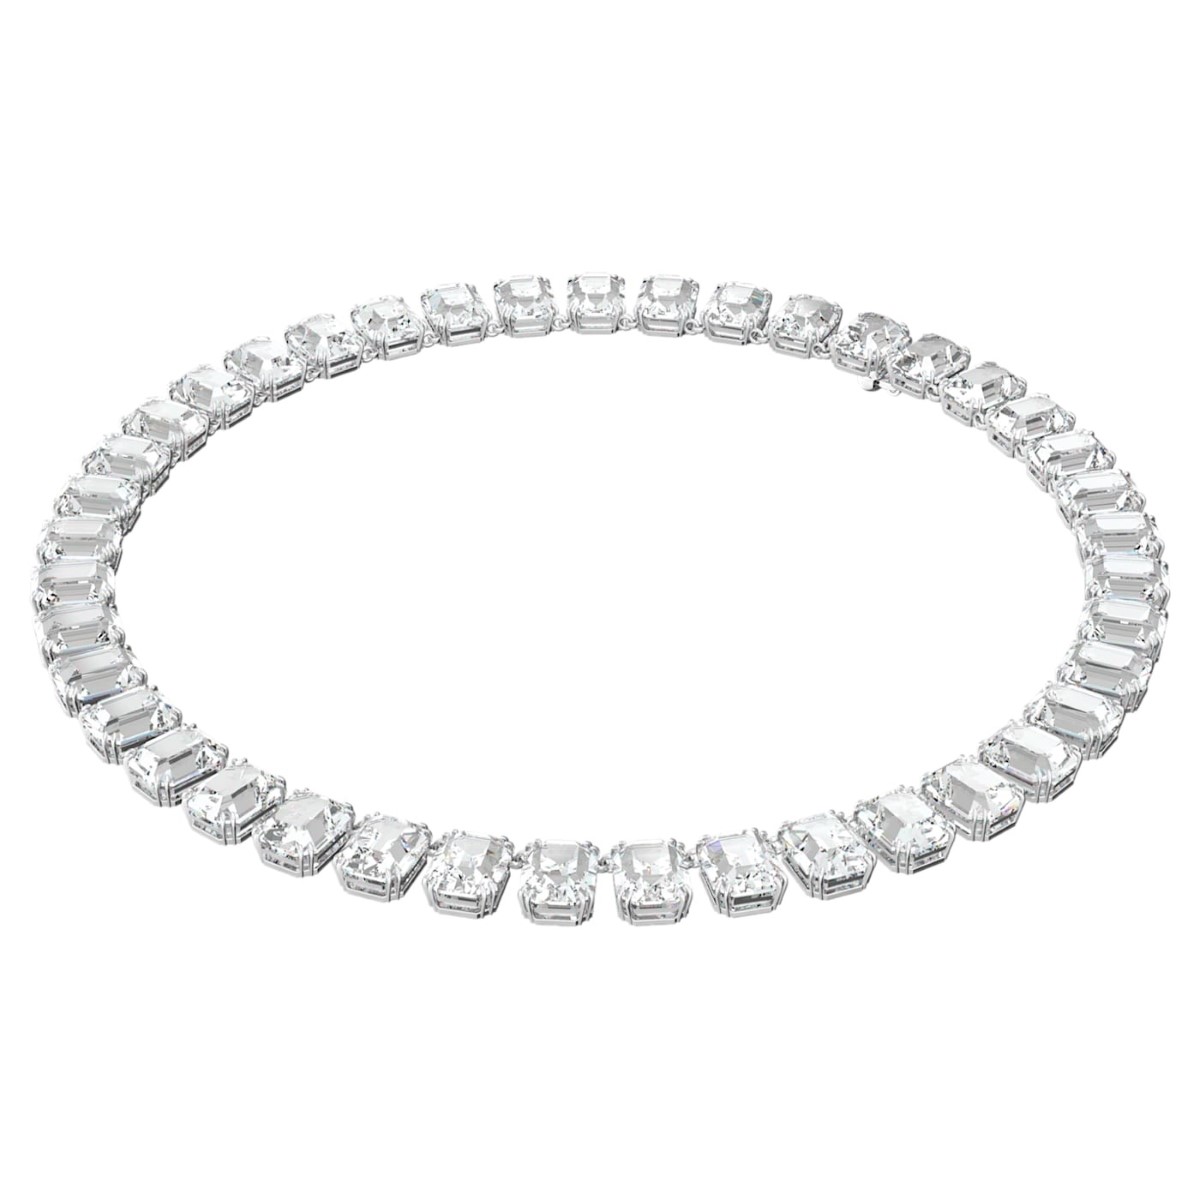 Swarovski Millenia Necklace Octagon Cut Crystals - White with Rhodium Plating 5614929